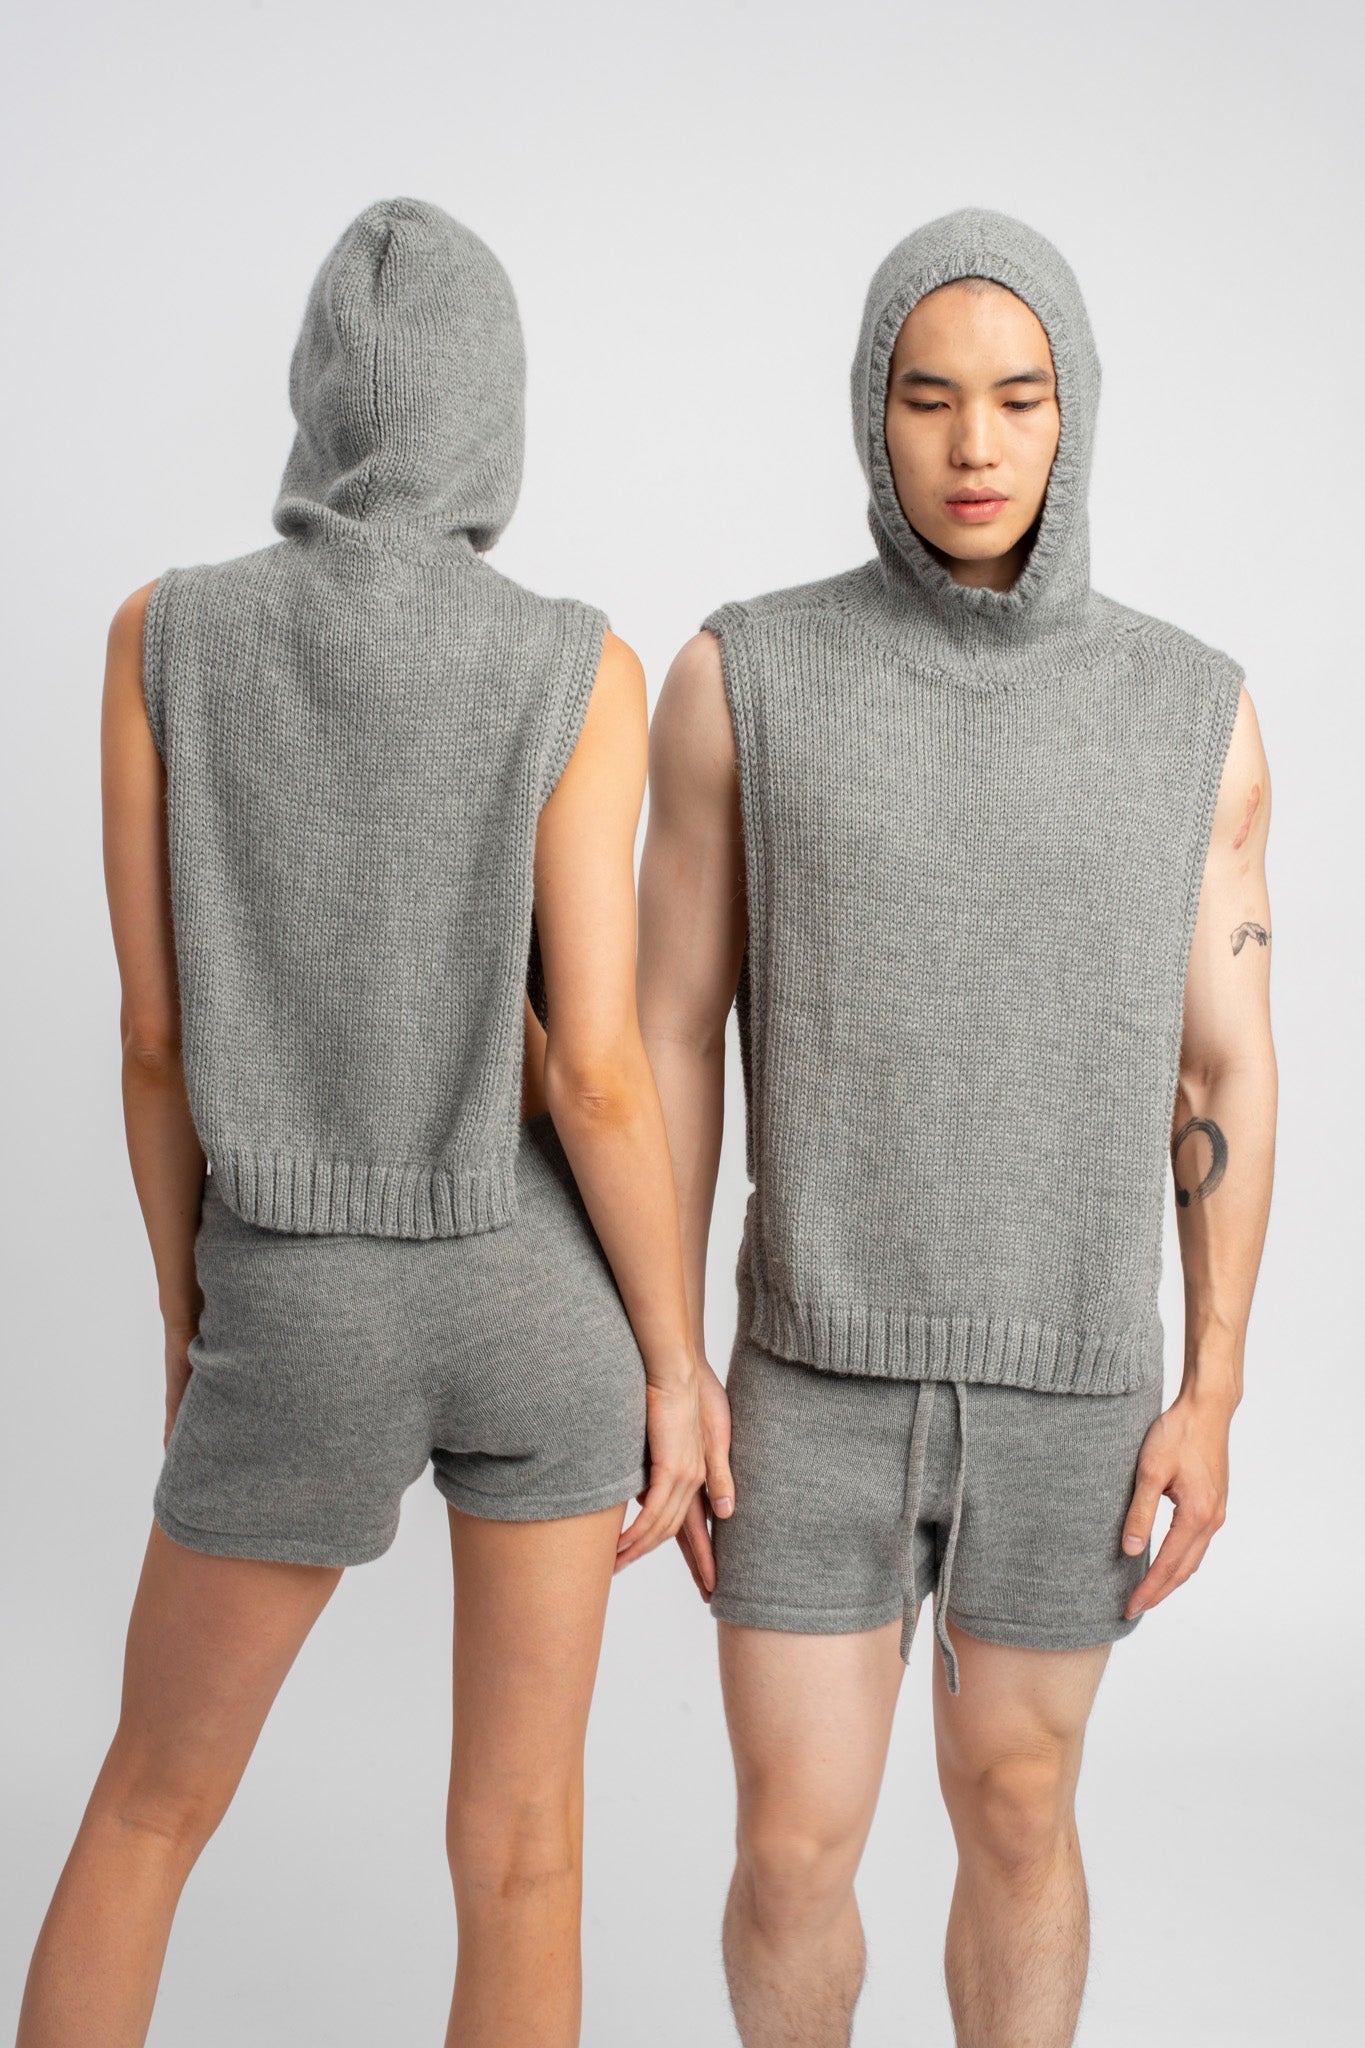 Models wearing knitwear alpaca wool light grey shorts, front and back